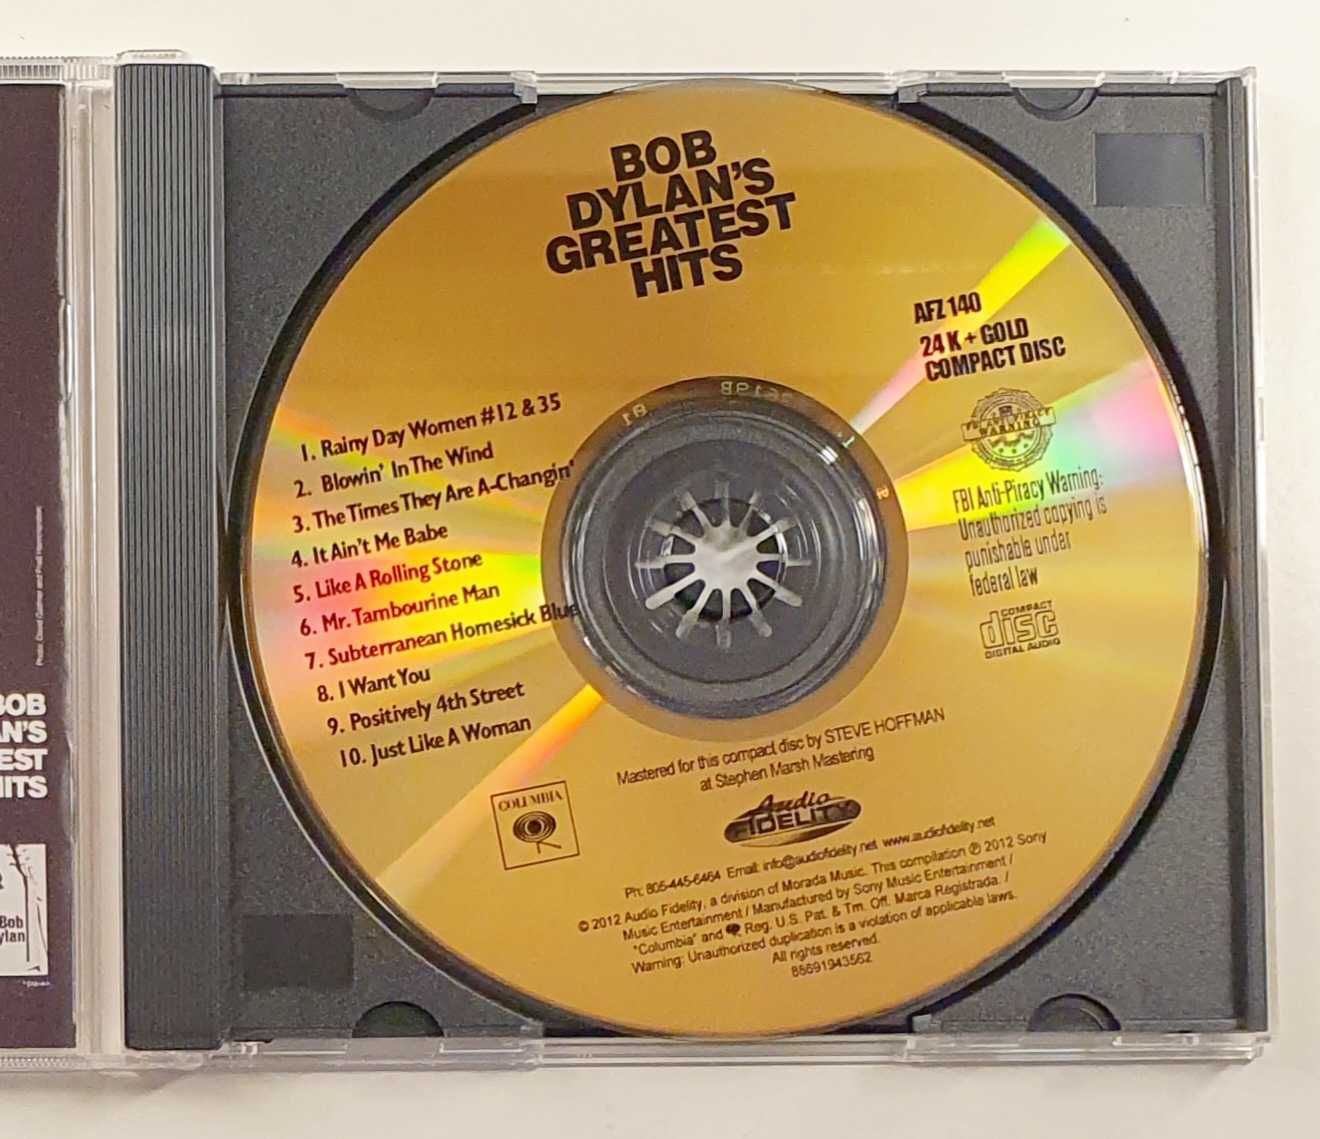 Bob Dylan - Greatest Hits (Audio Fidelity 24kt Ltd)